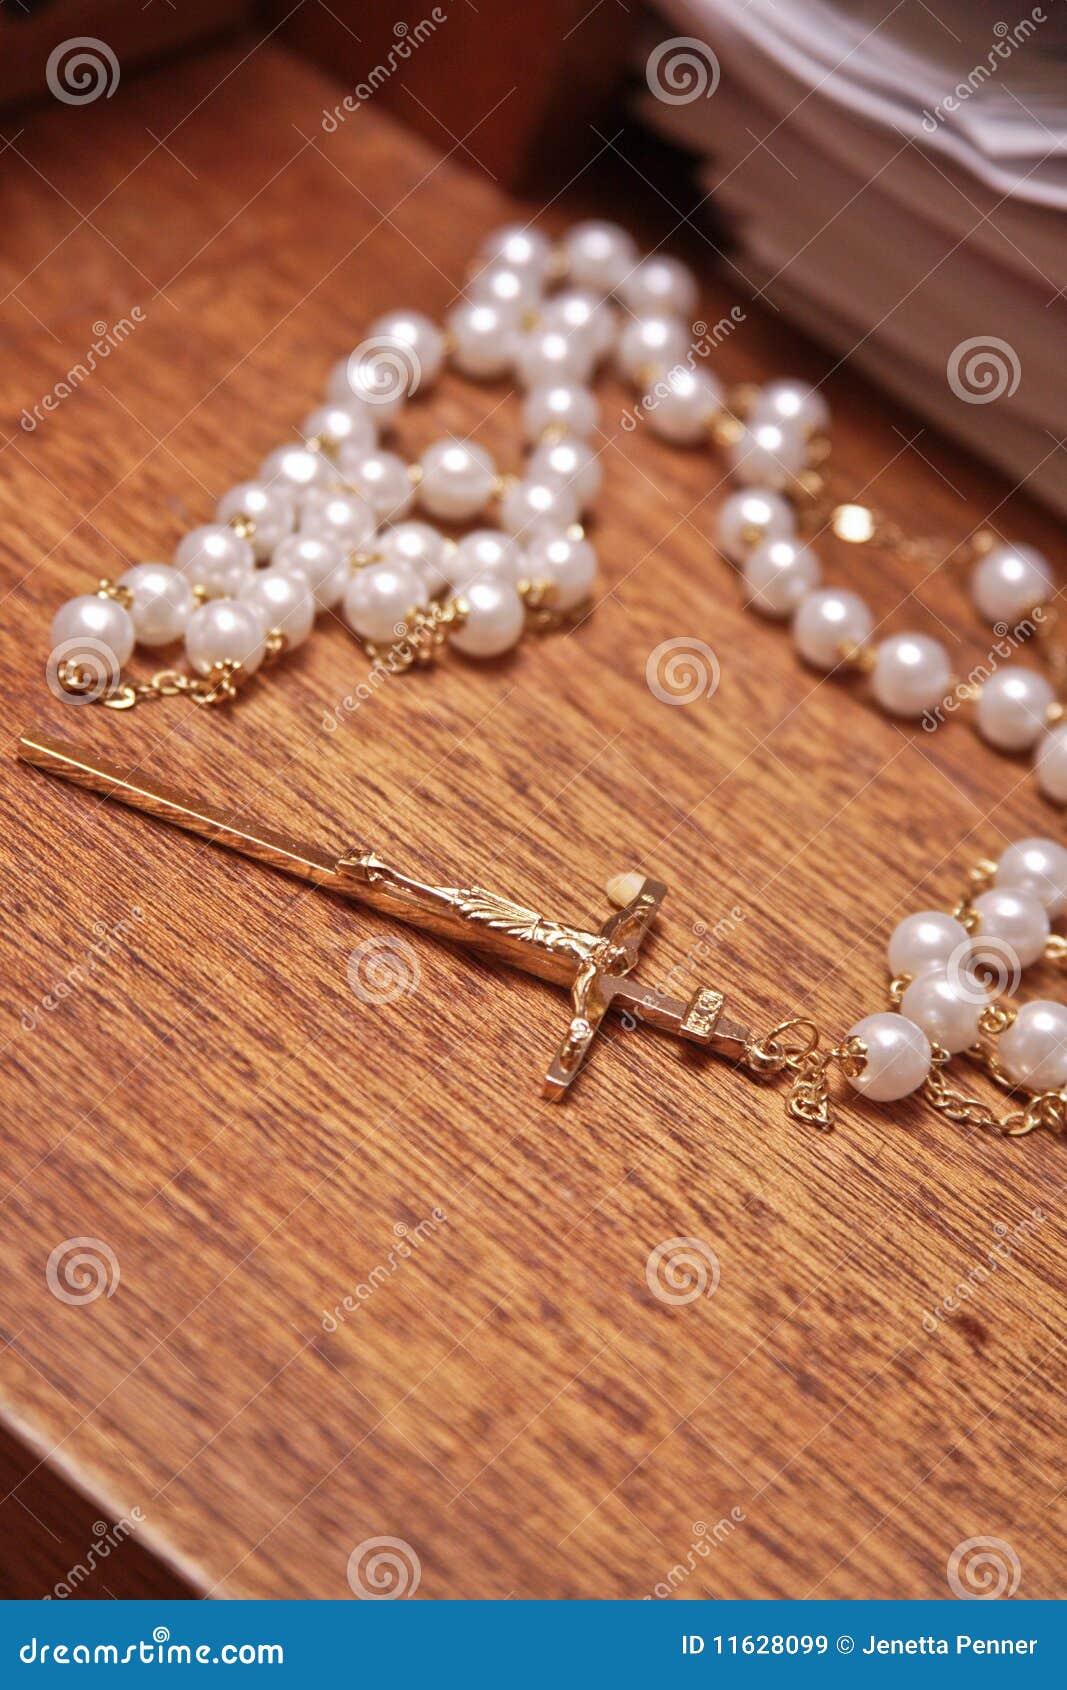 St.Bernadette White Mother of Pearl Rosary Necklace Prayer Beads Cross  Crucifix | eBay